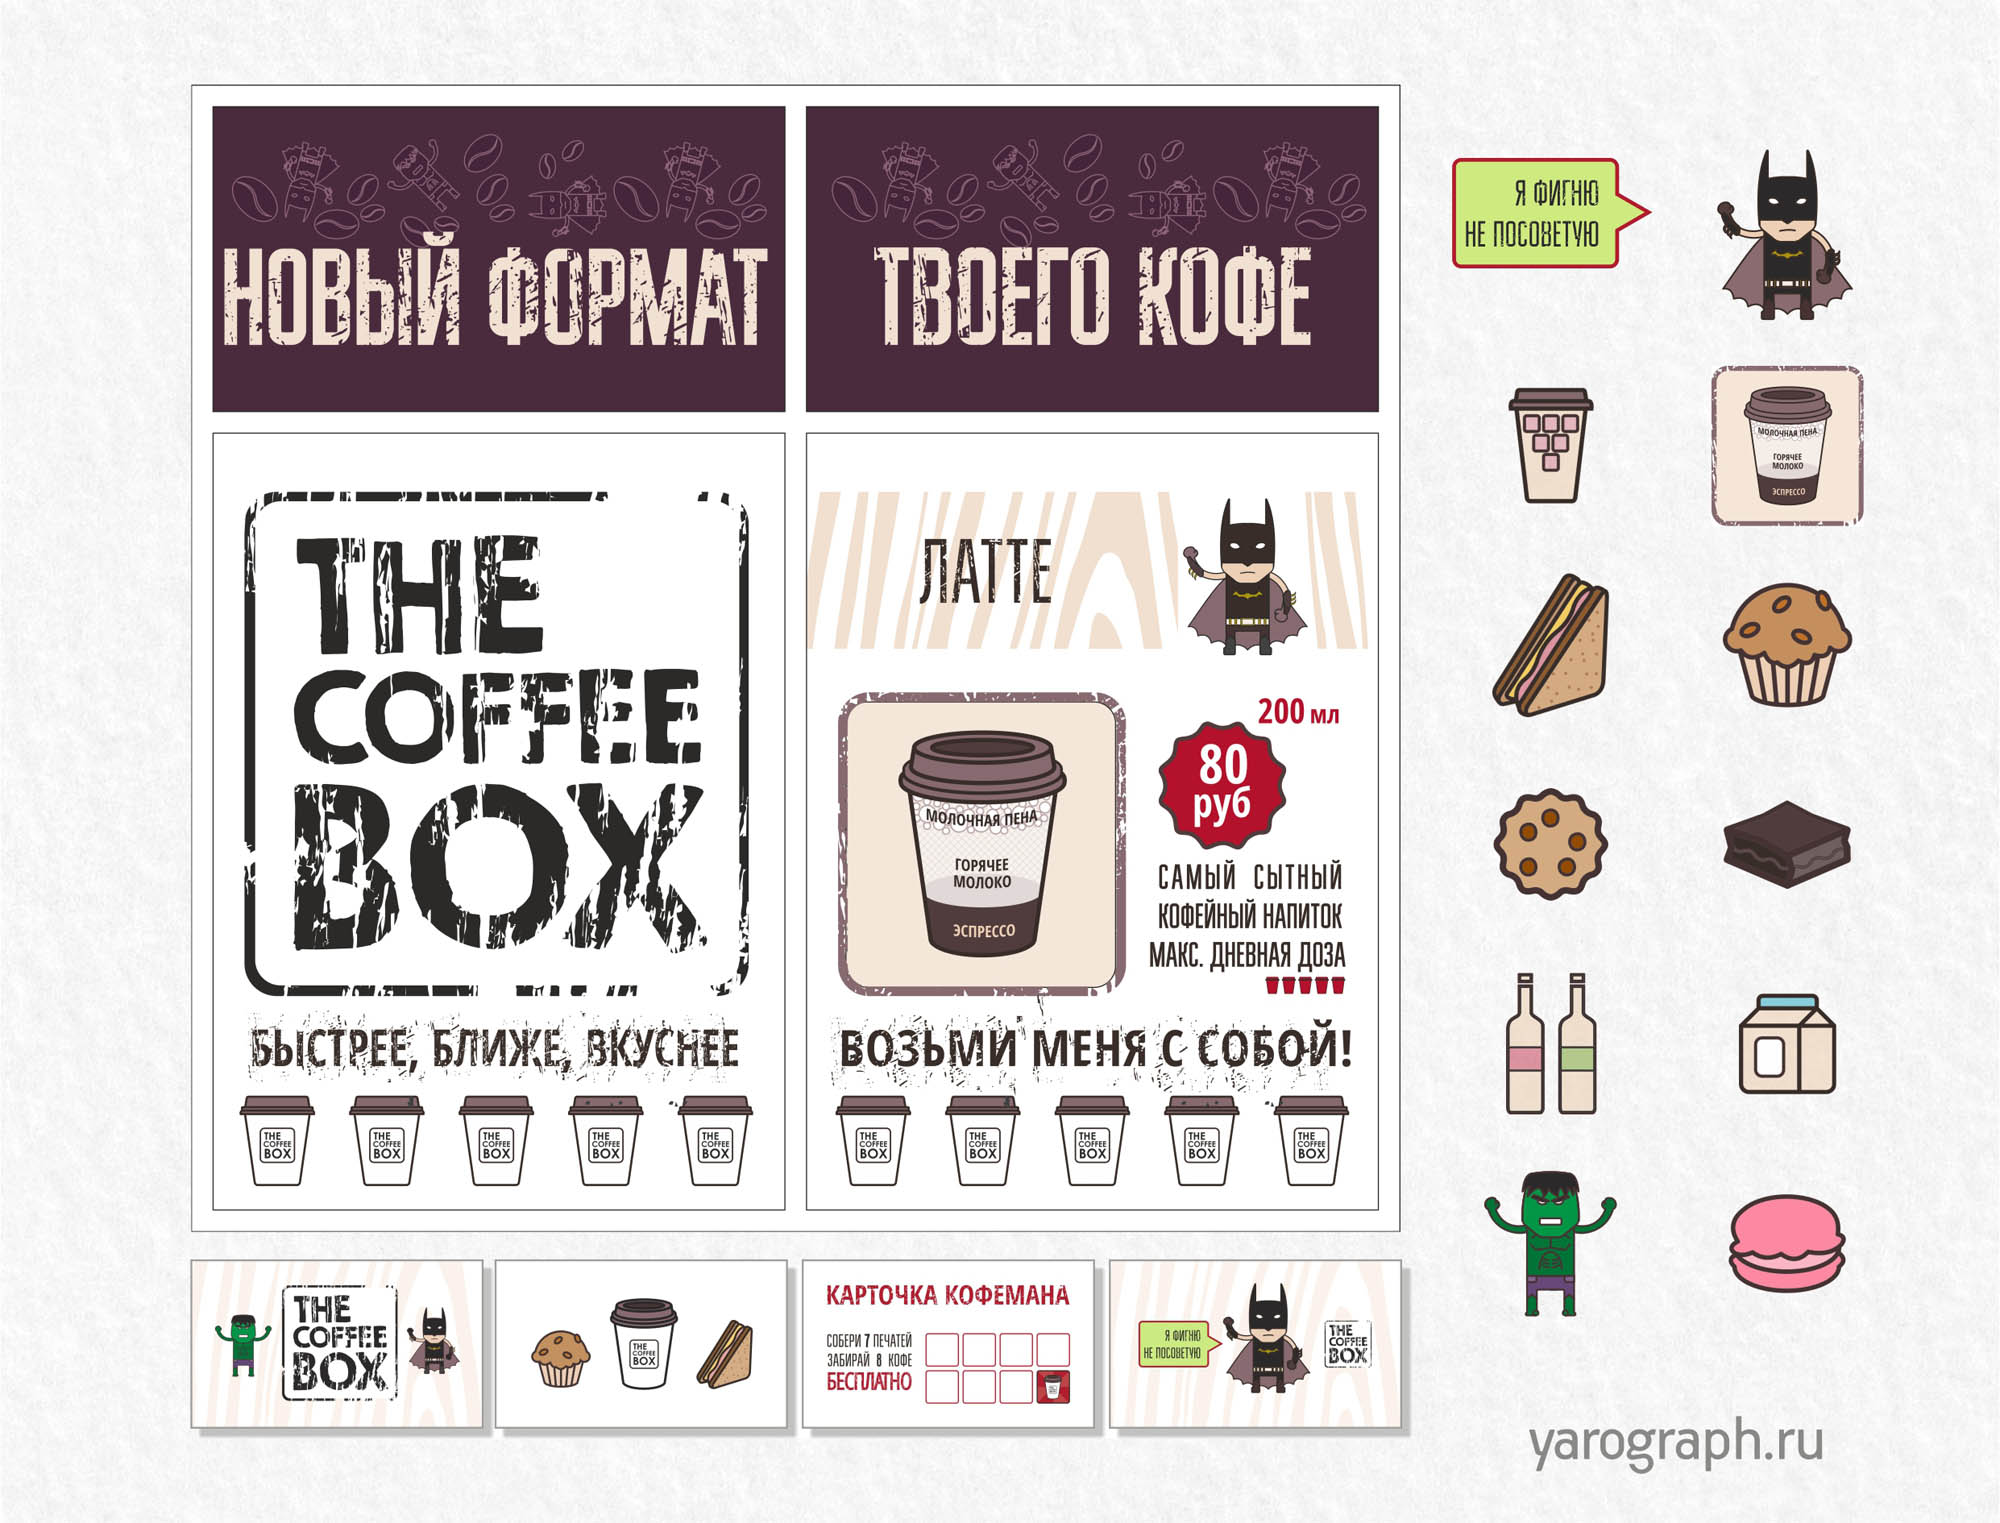 THE COFFEE BOX